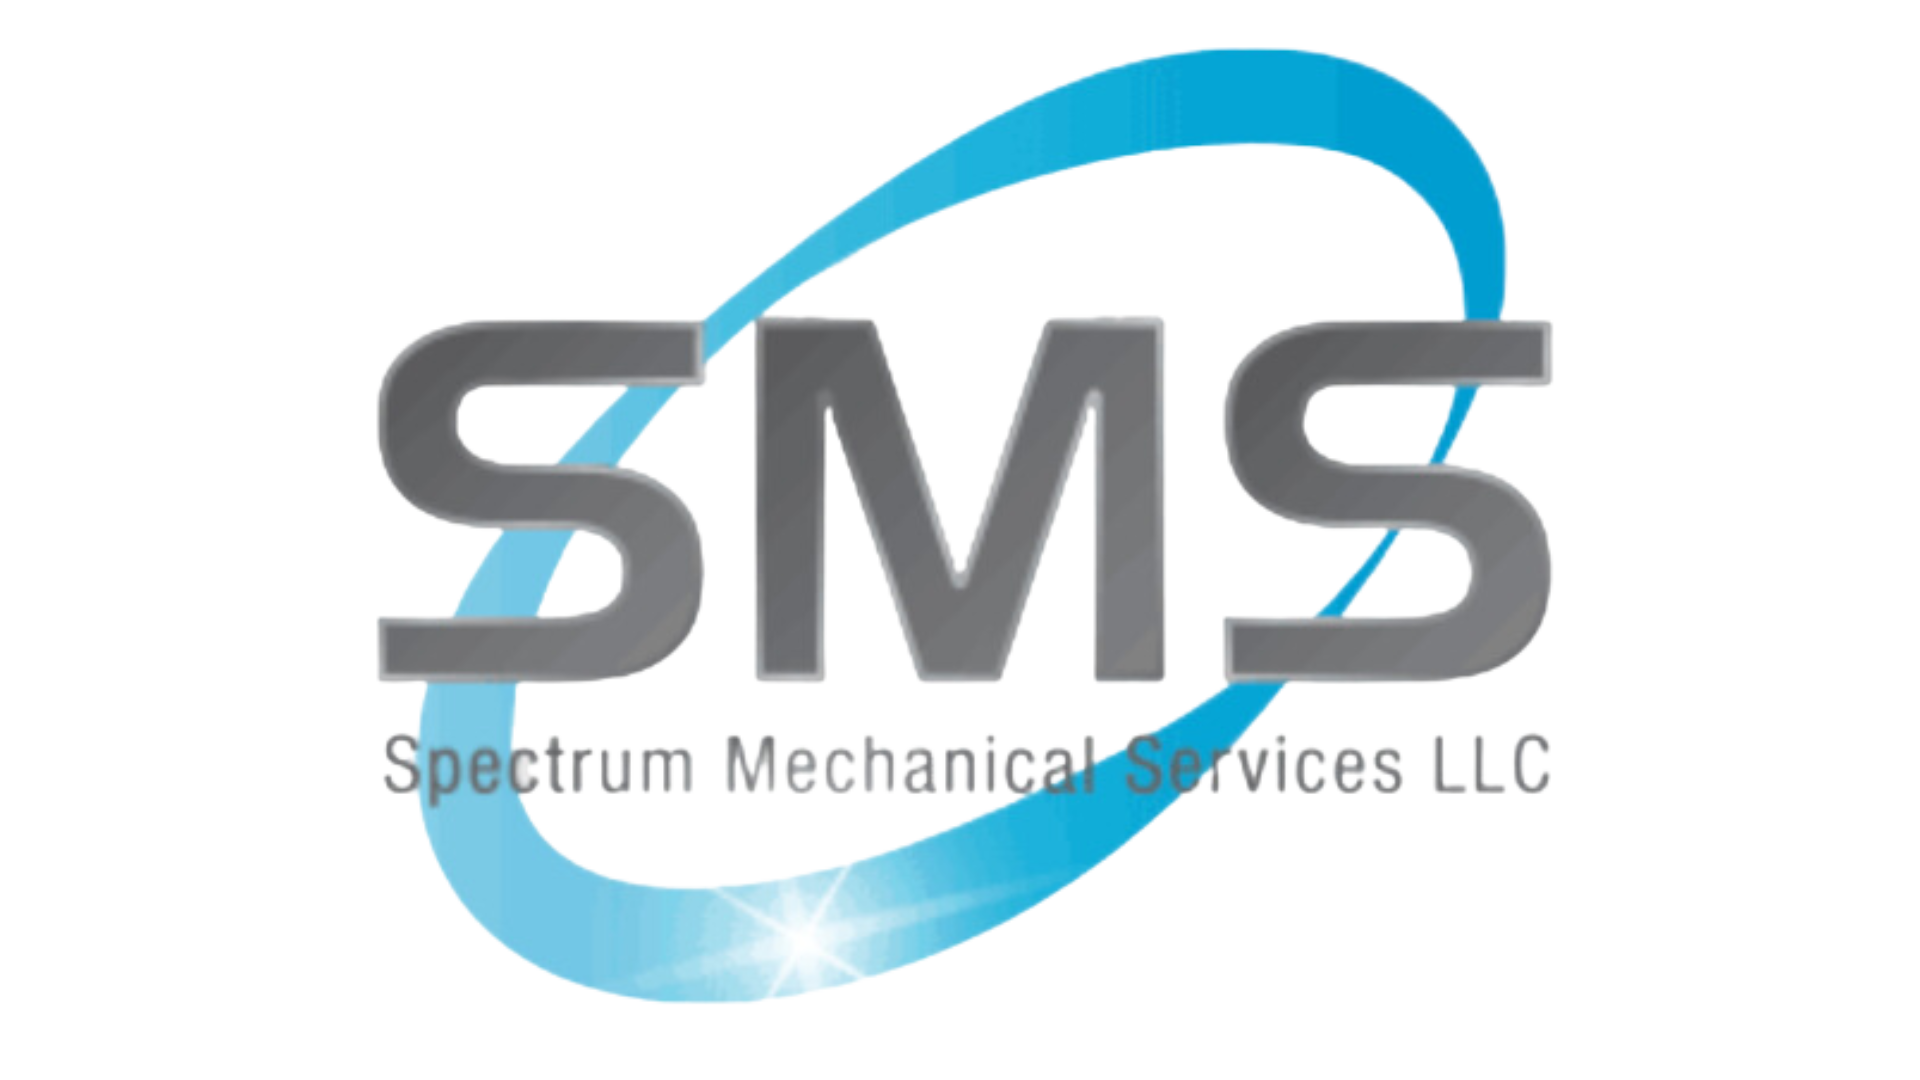 Spectrum Mechanical Services logo